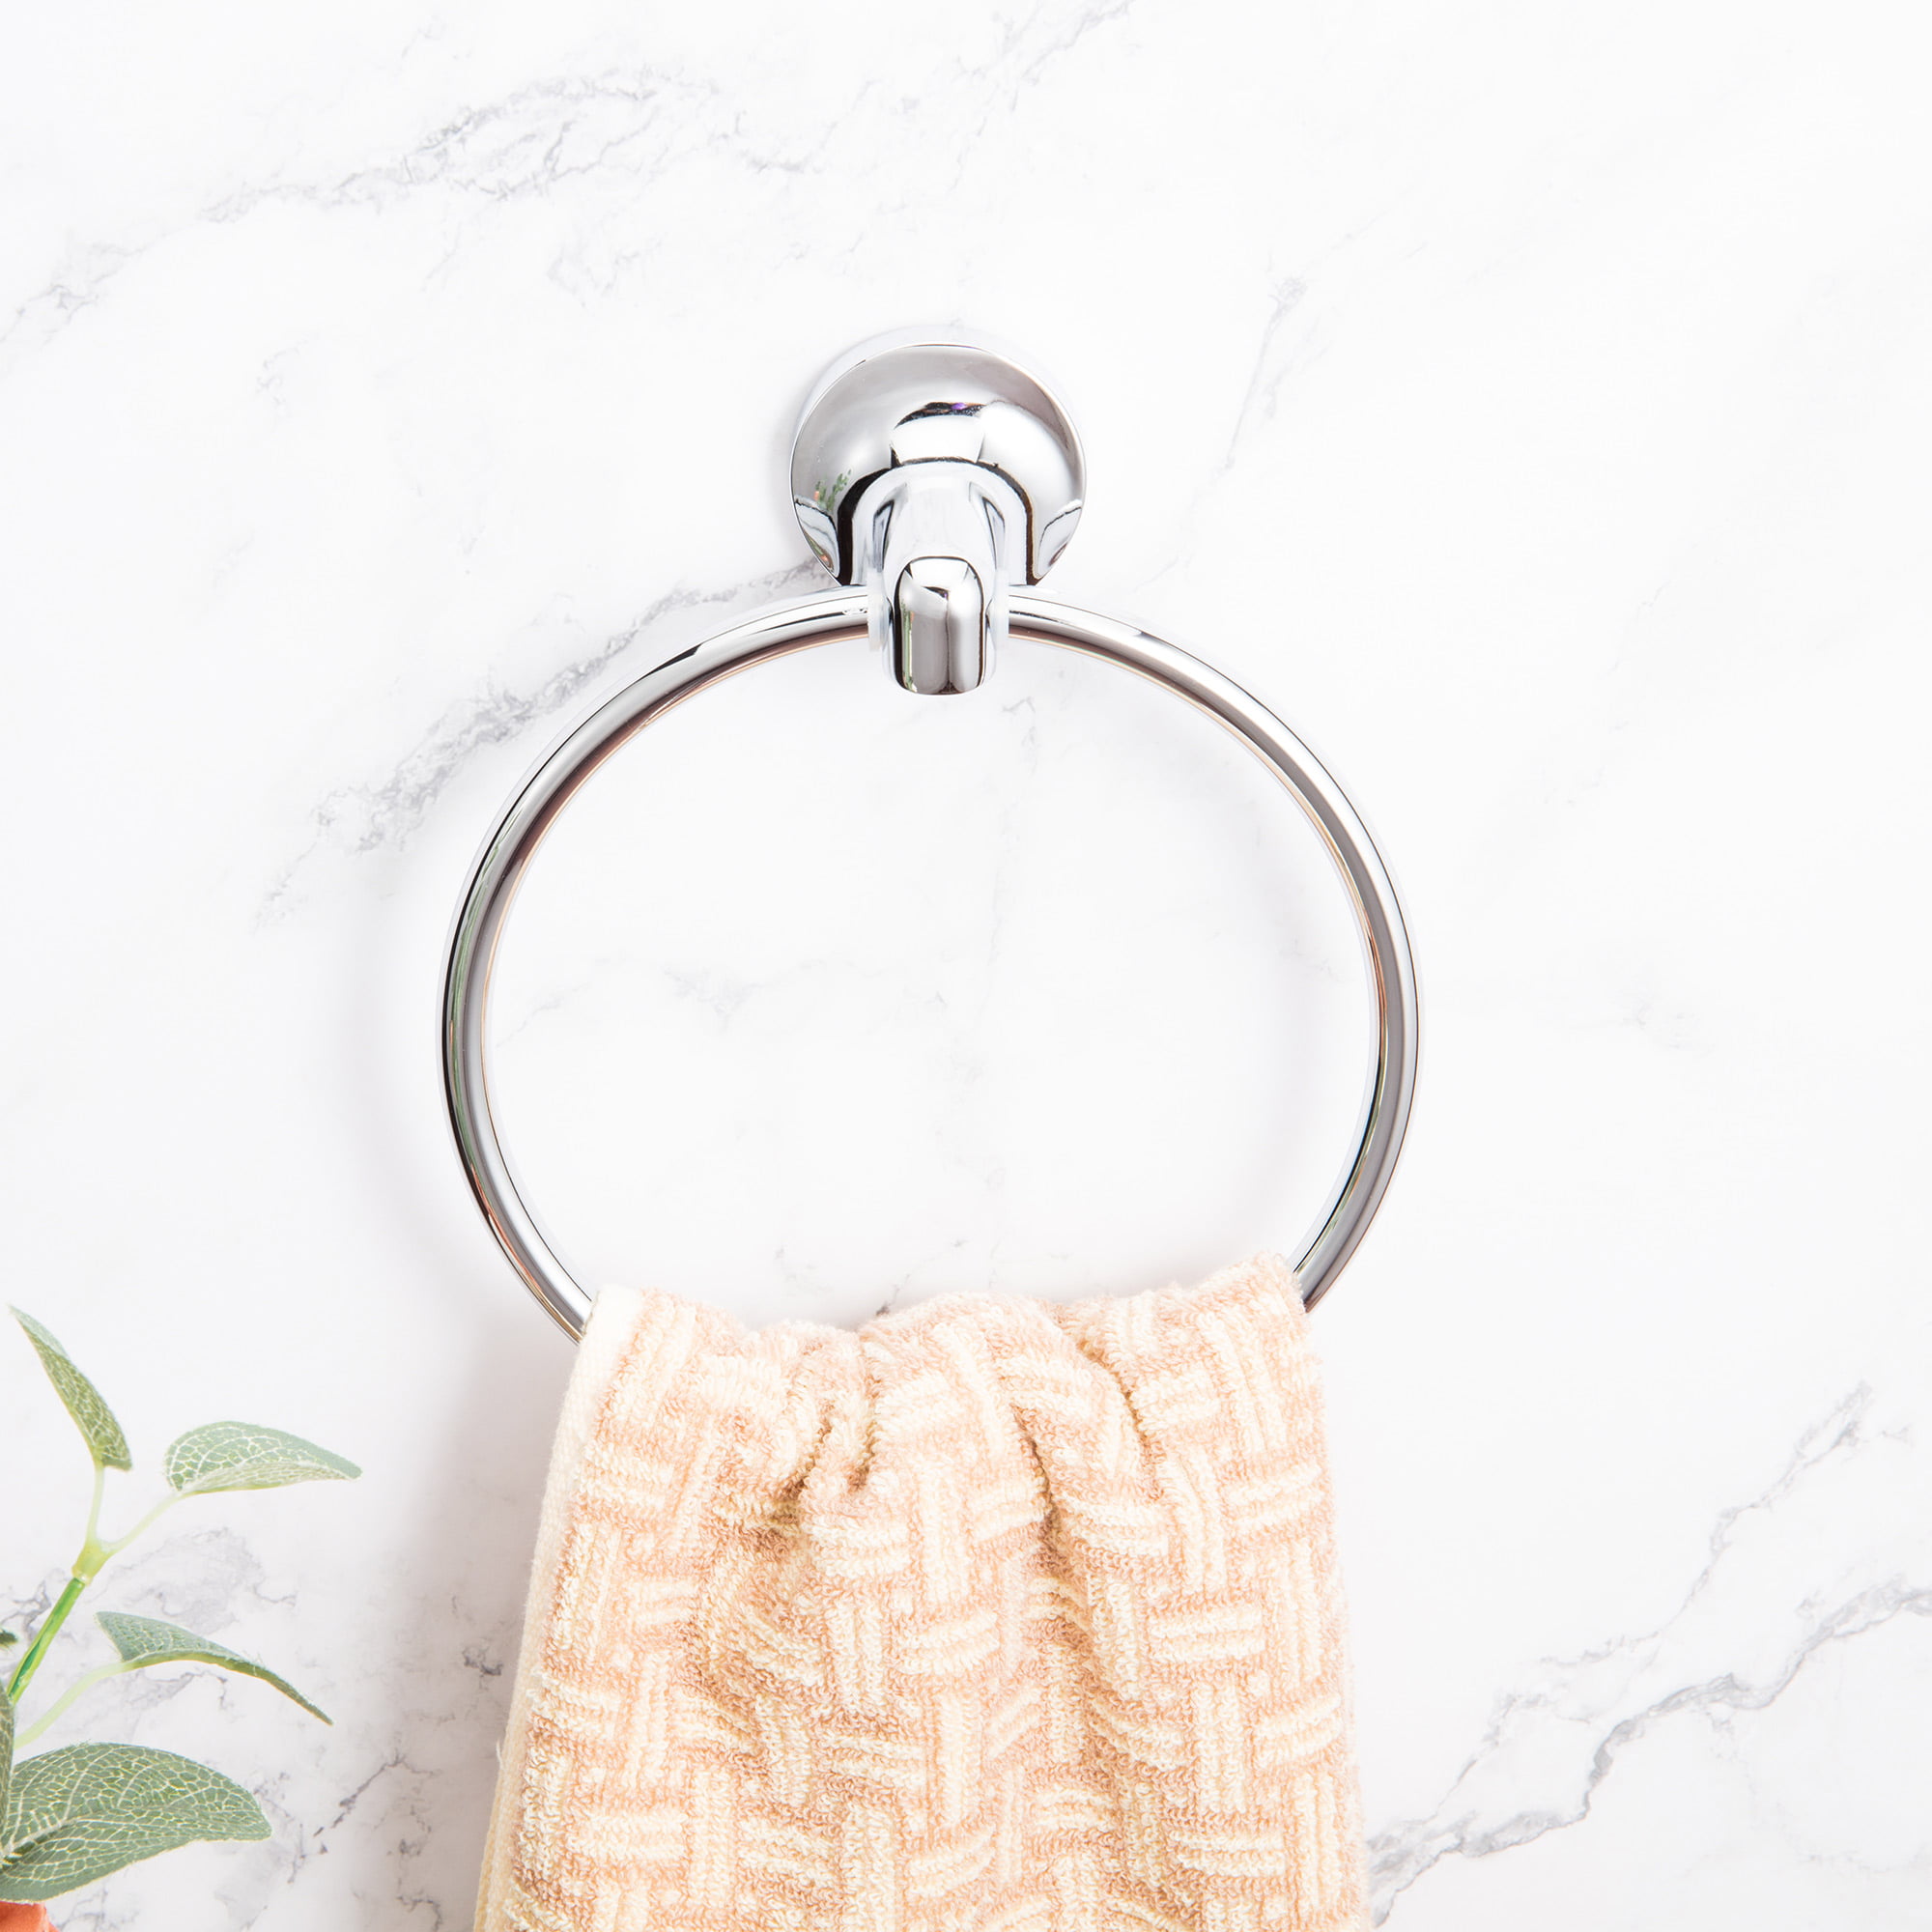 Bath Towel Holder Hand Towel Ring Hanging Towel Hanger Bathroom